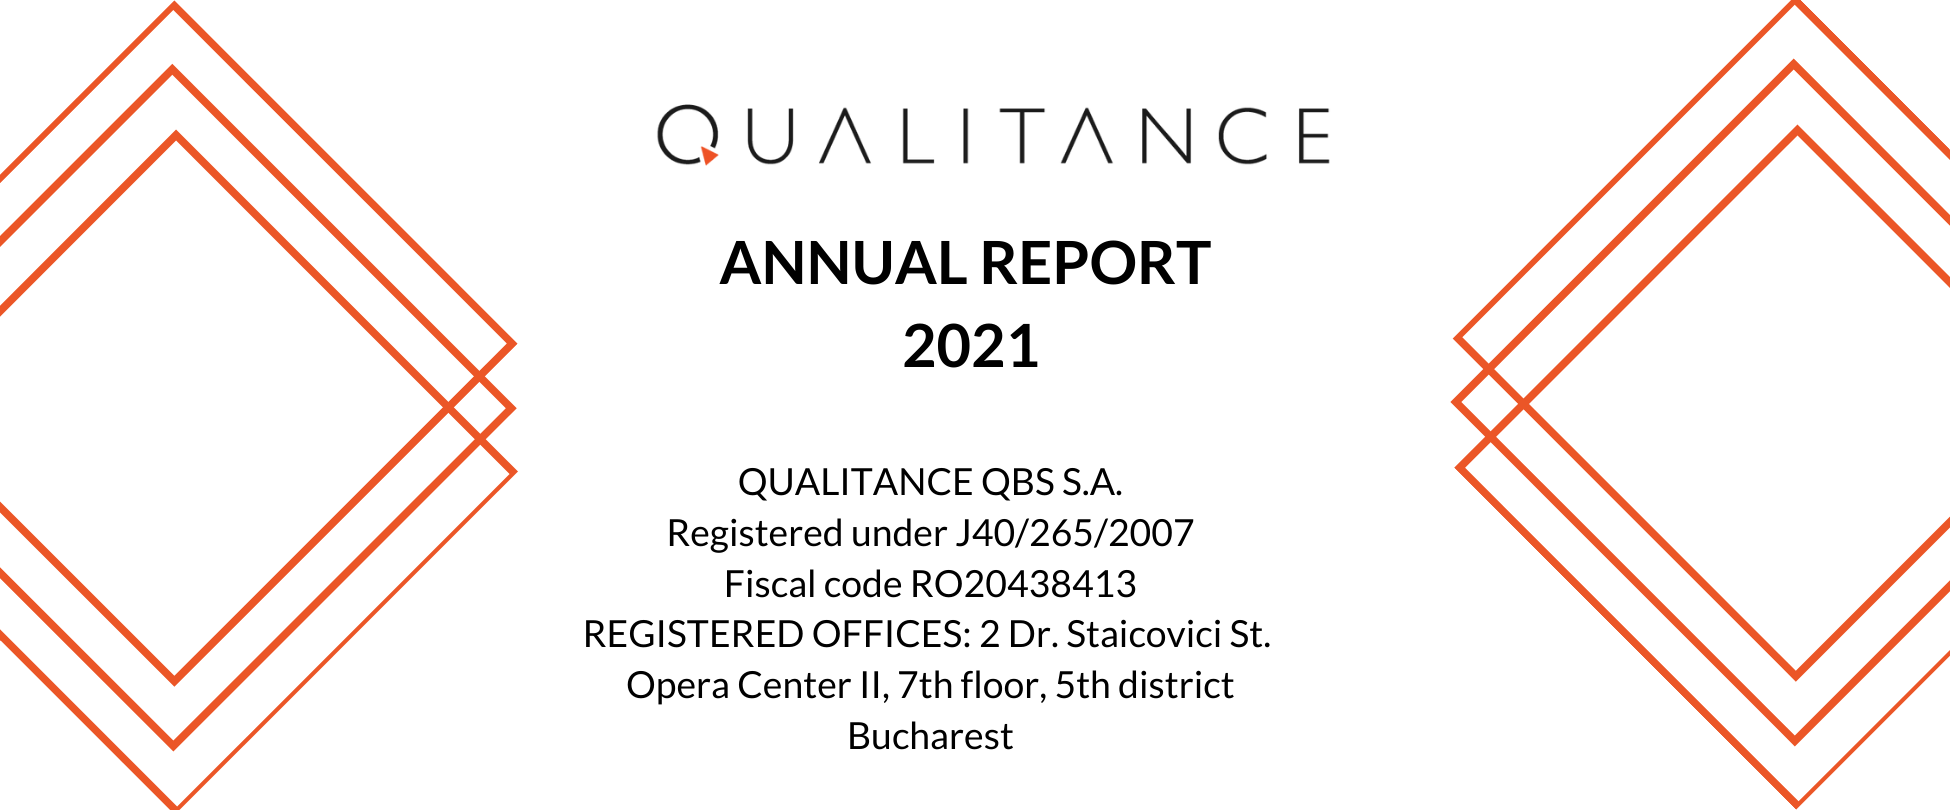 QUALITANCE 2021 Annual Report